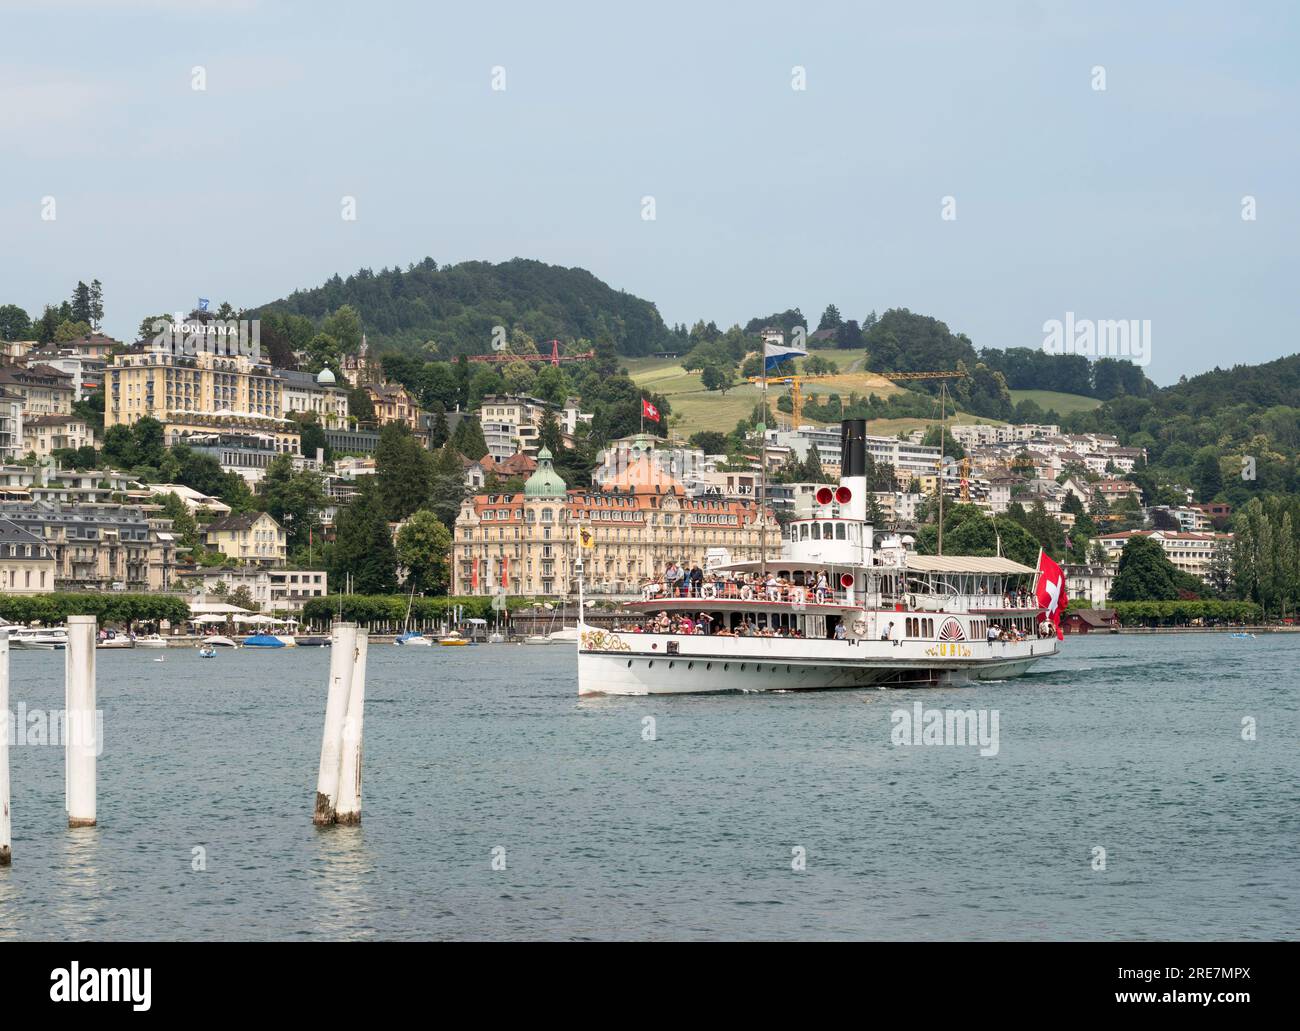 Il piroscafo a pale Uri si avvicina a Lucerna sul lago di Lucerna in Svizzera, Europa. Foto Stock